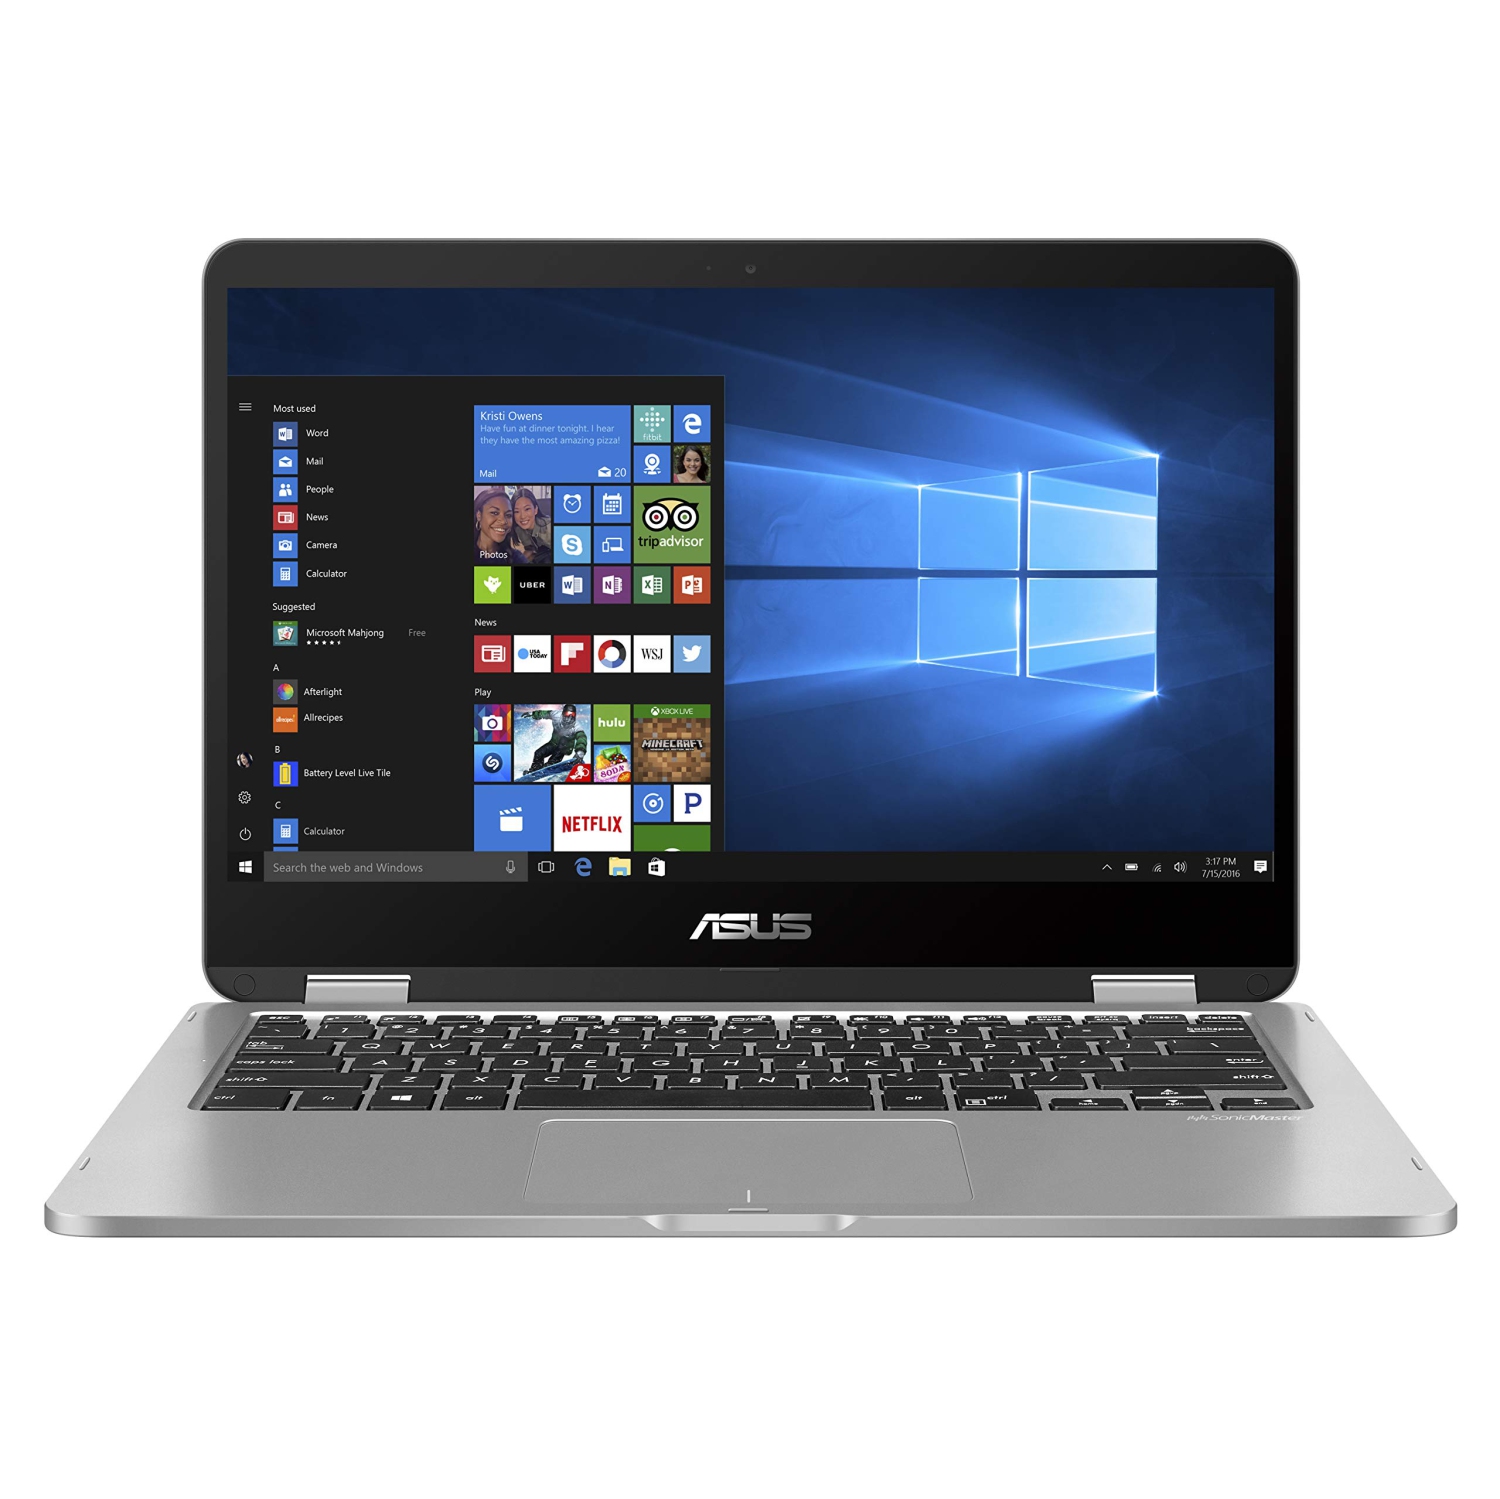 ASUS VivoBook Flip 14 Thin and Light 2-in-1 Laptop, 14 HD Touchscreen, Intel Celeron N4020 Processor, 4GB RAM, 128GB EMMC, Windows 10 Home in S mode, Fingerprint, J401MA-AB01-CA